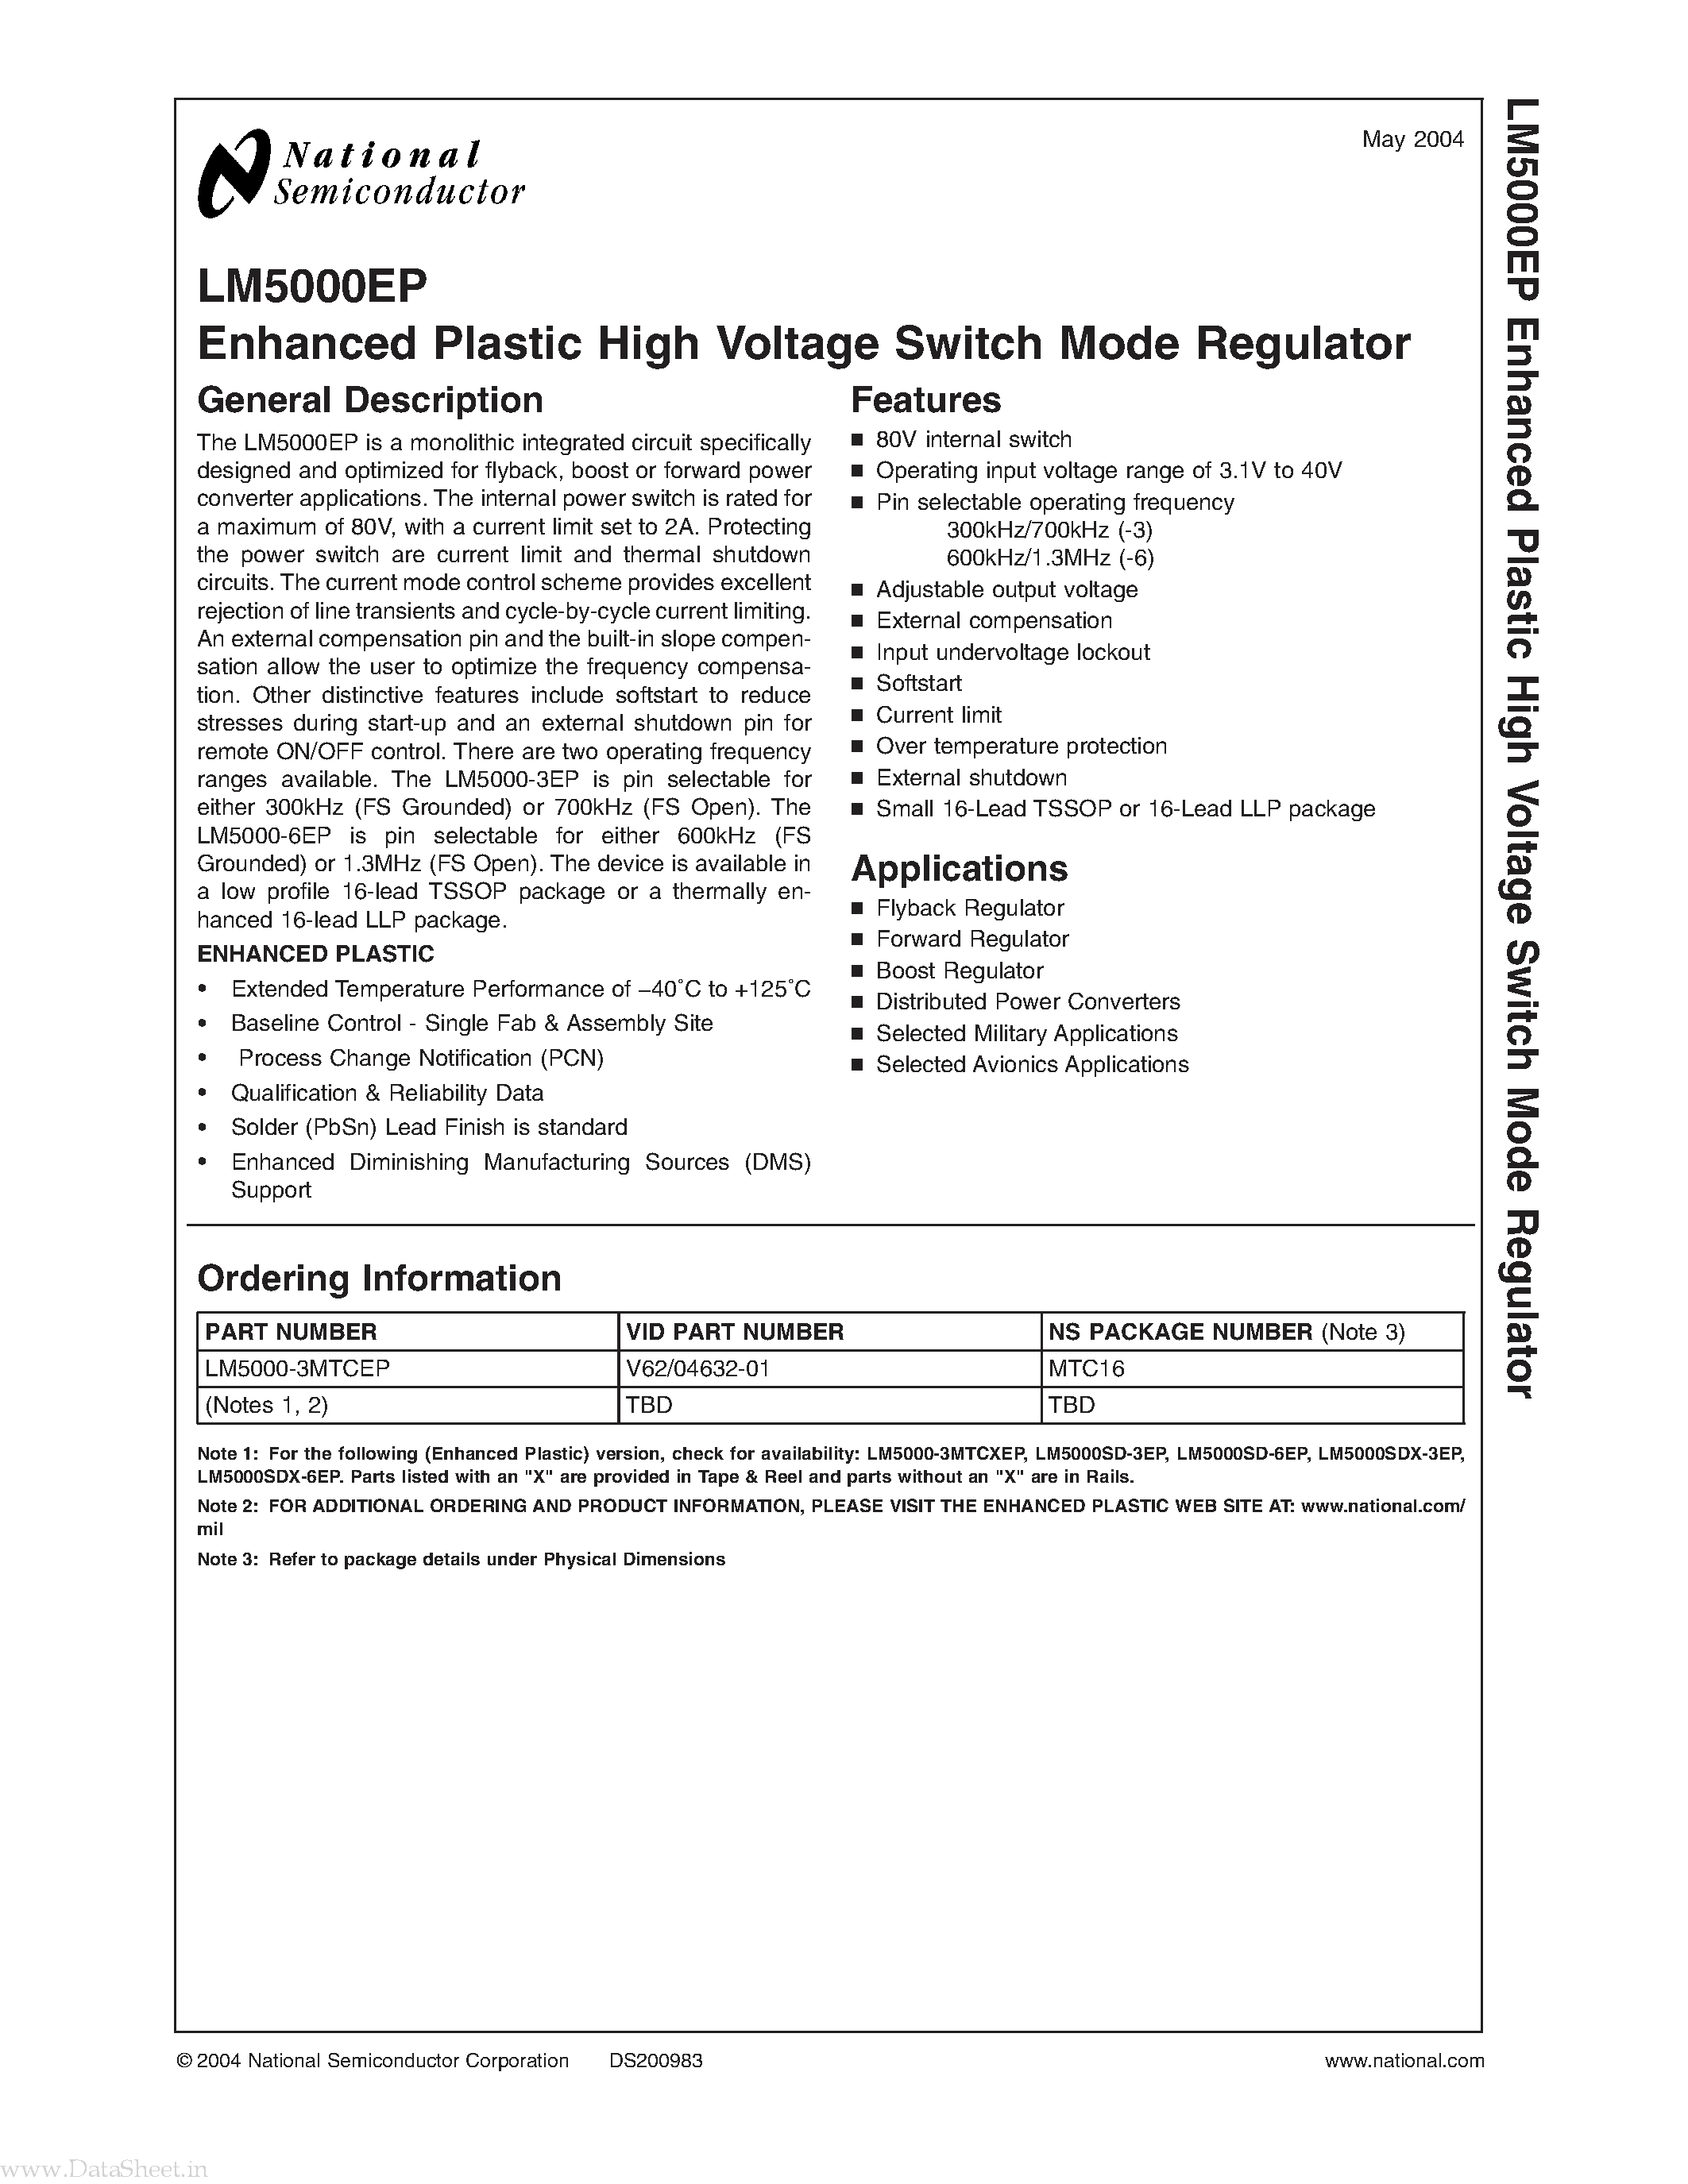 Datasheet LM5000EP - Enhanced Plastic High Voltage Switch Mode Regulator page 1